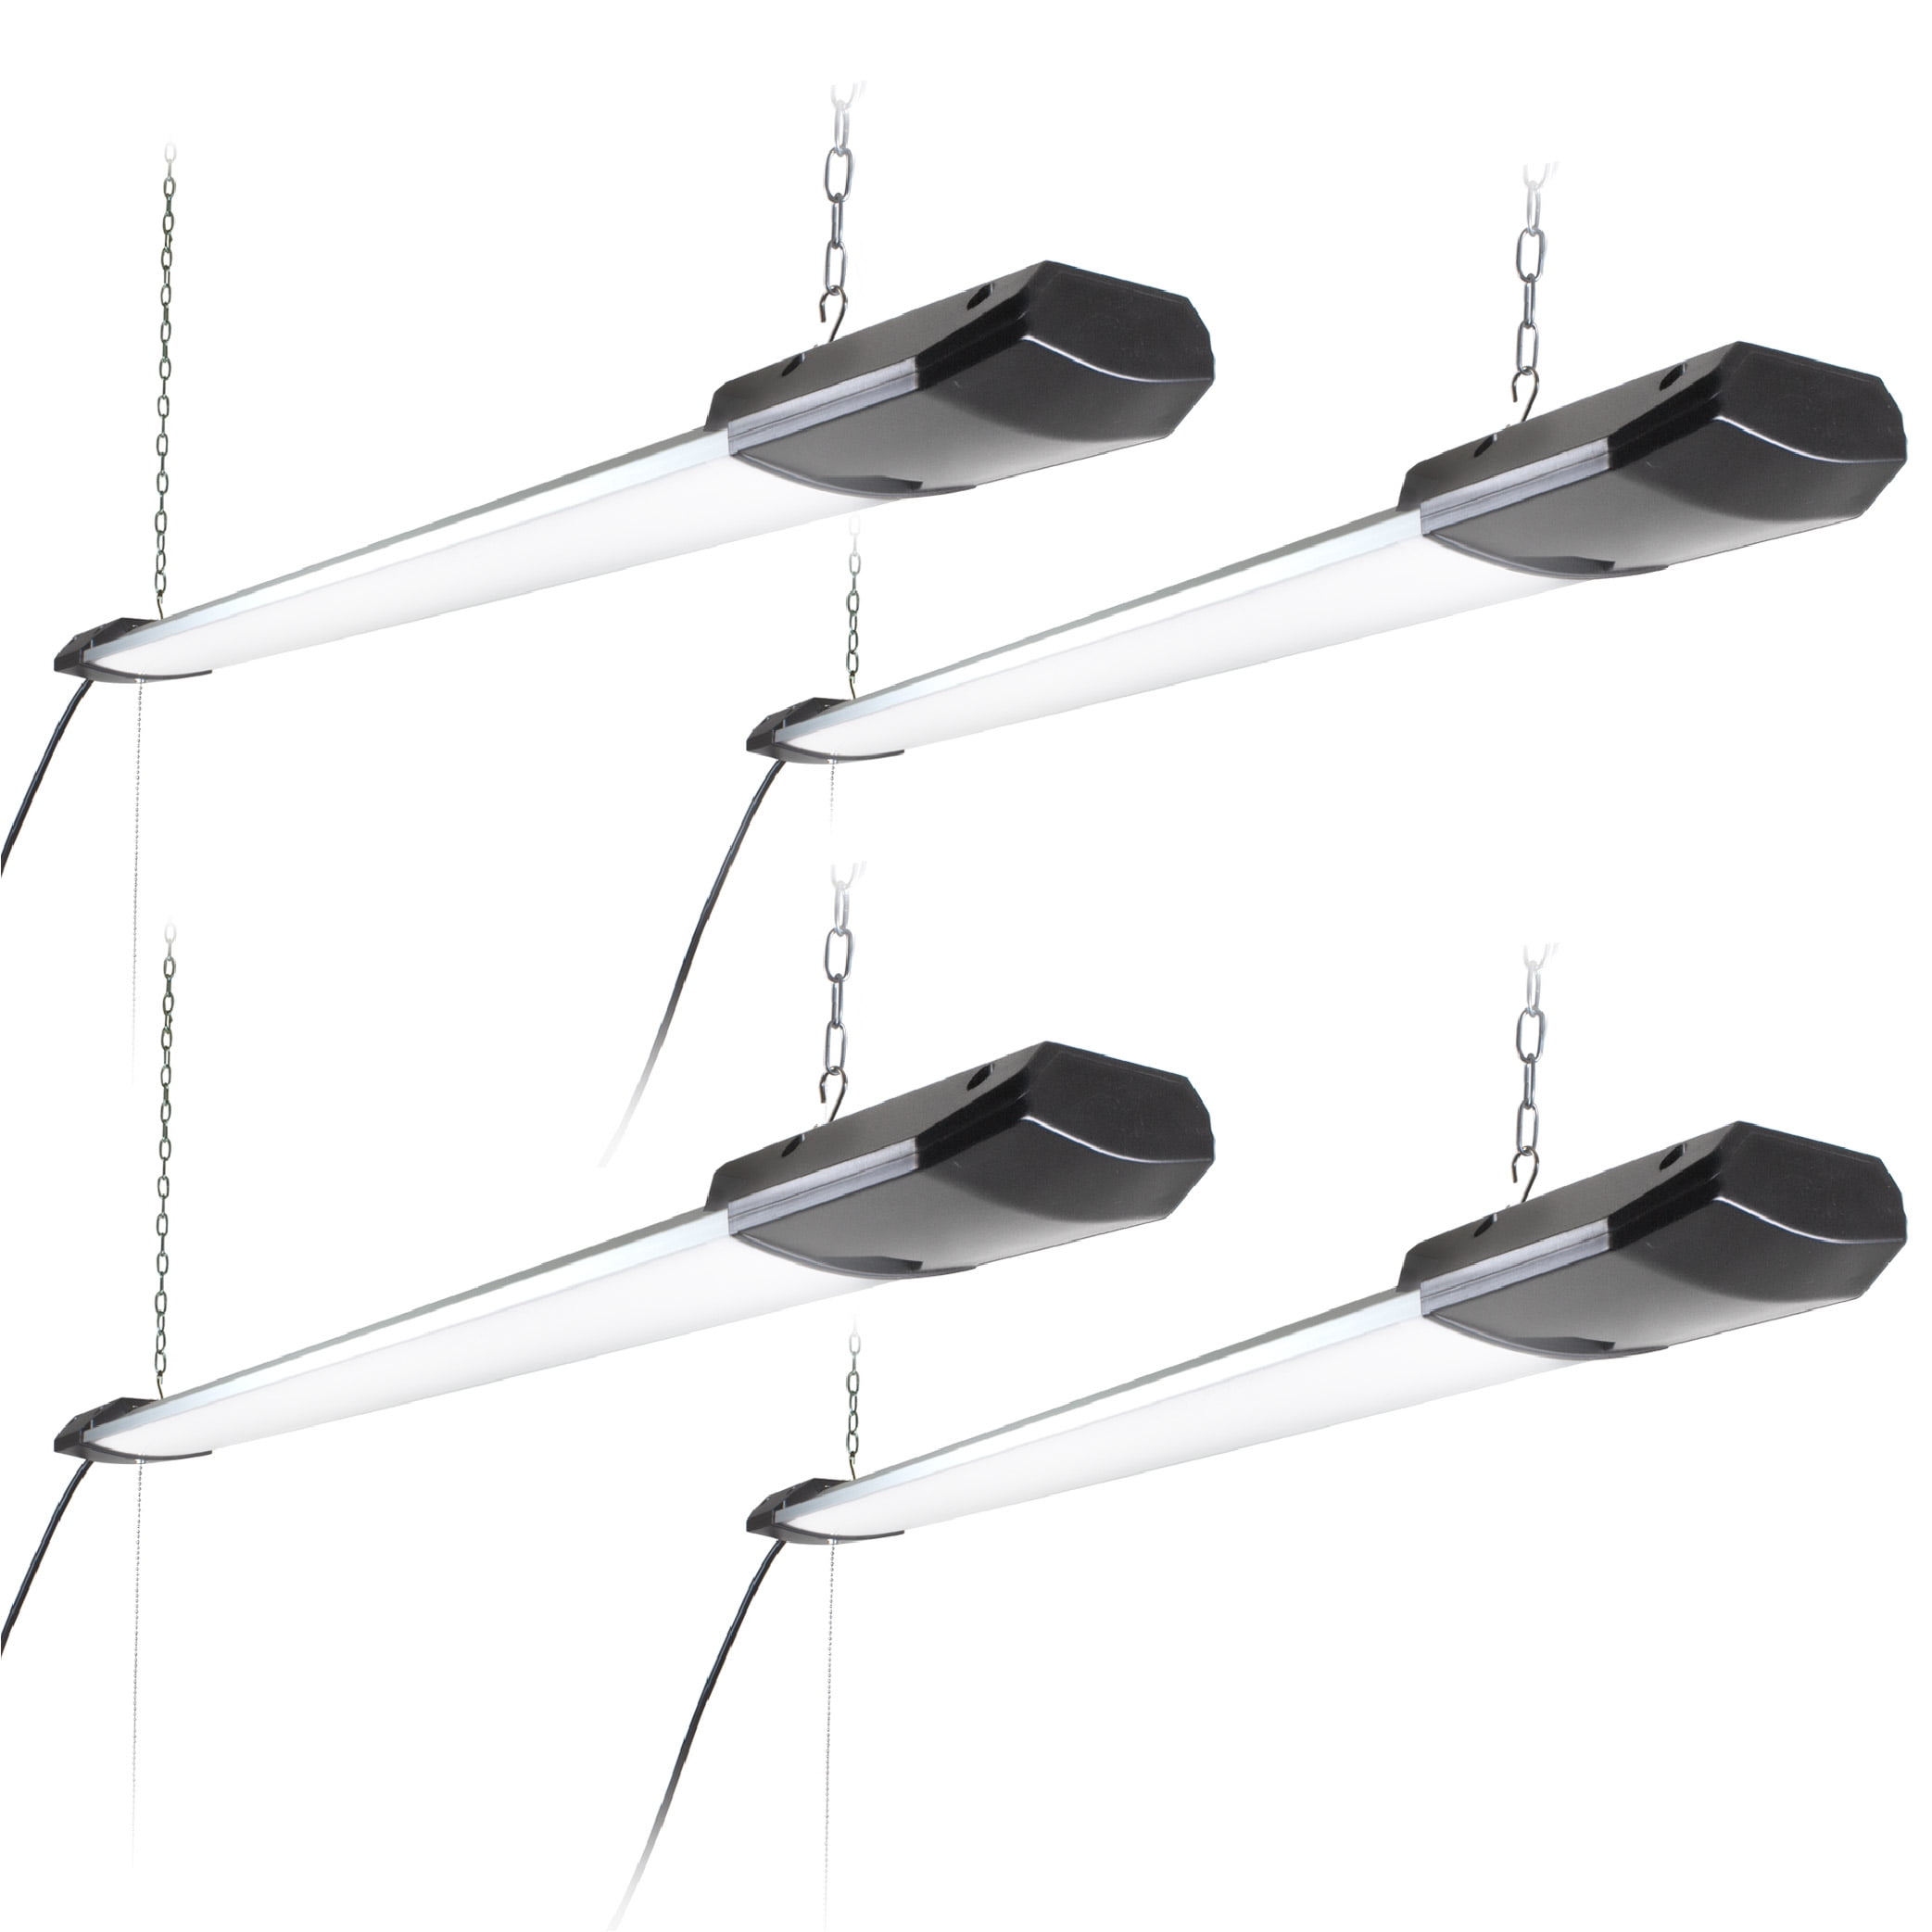 Details about   4 Pcs x 44W 4FT LED Shop Light for Storage Room Workbench Workshop Ceiling Light 